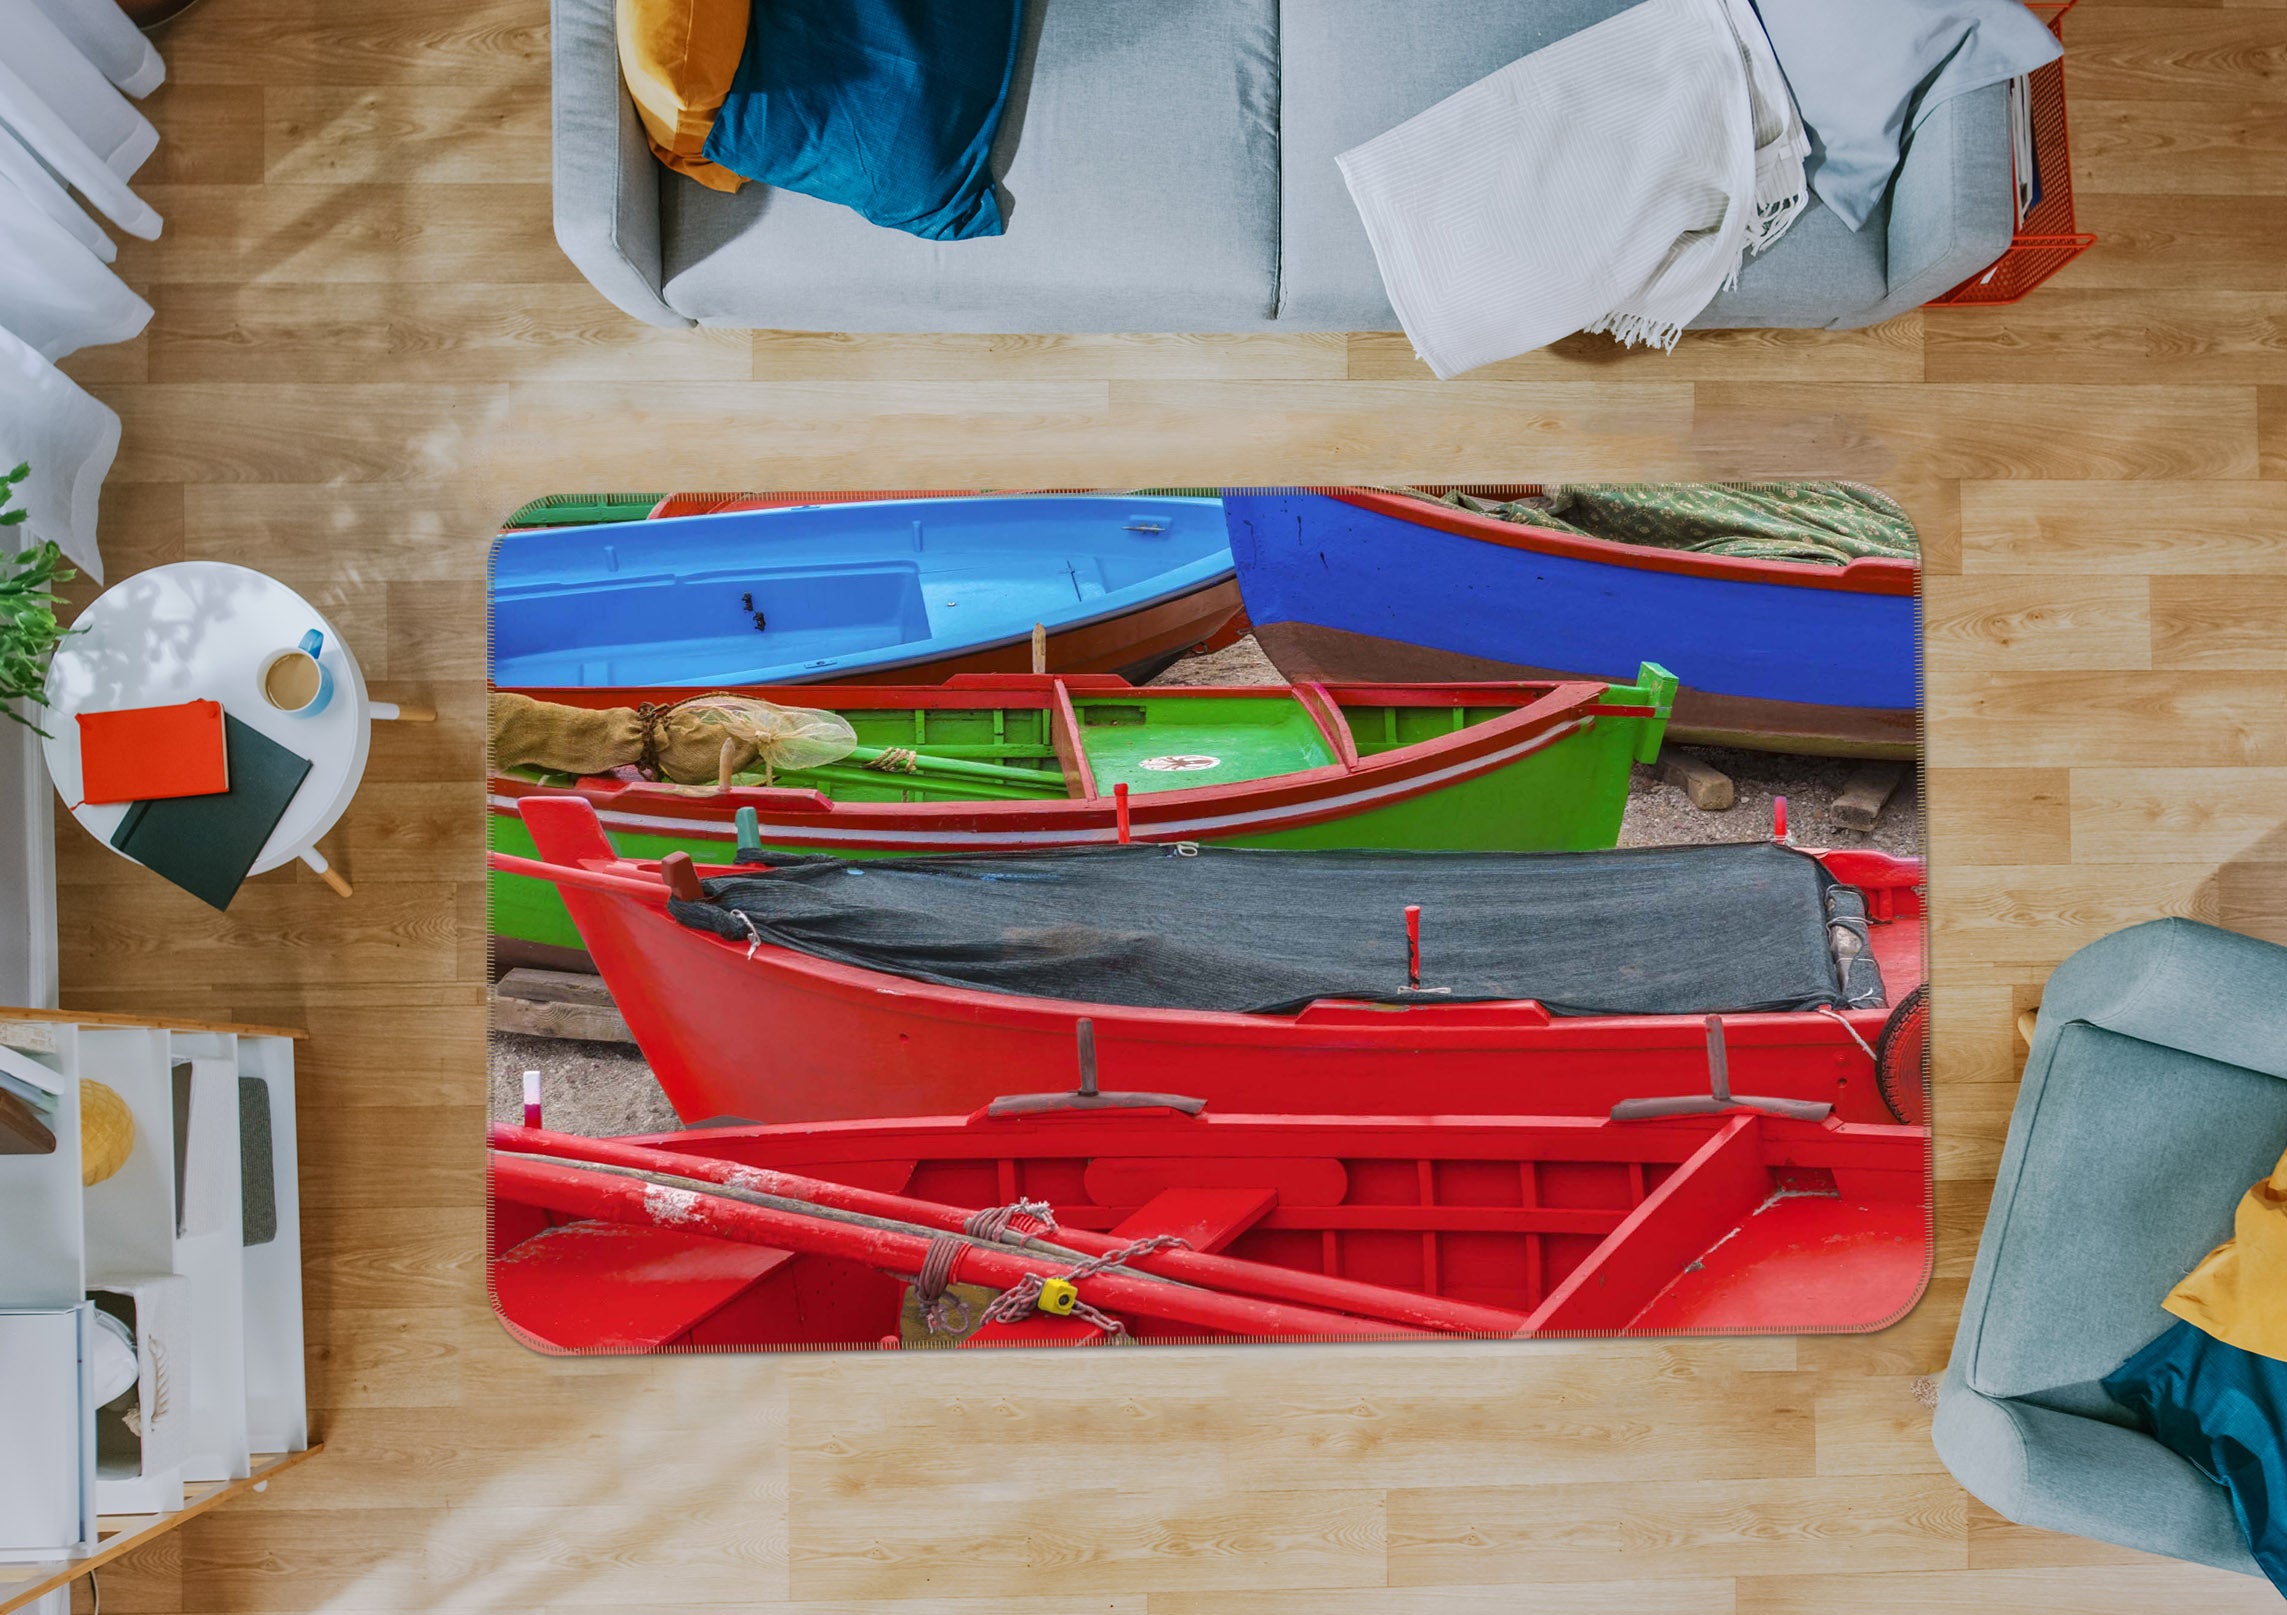 3D Red Boat 1152 Marco Carmassi Rug Non Slip Rug Mat